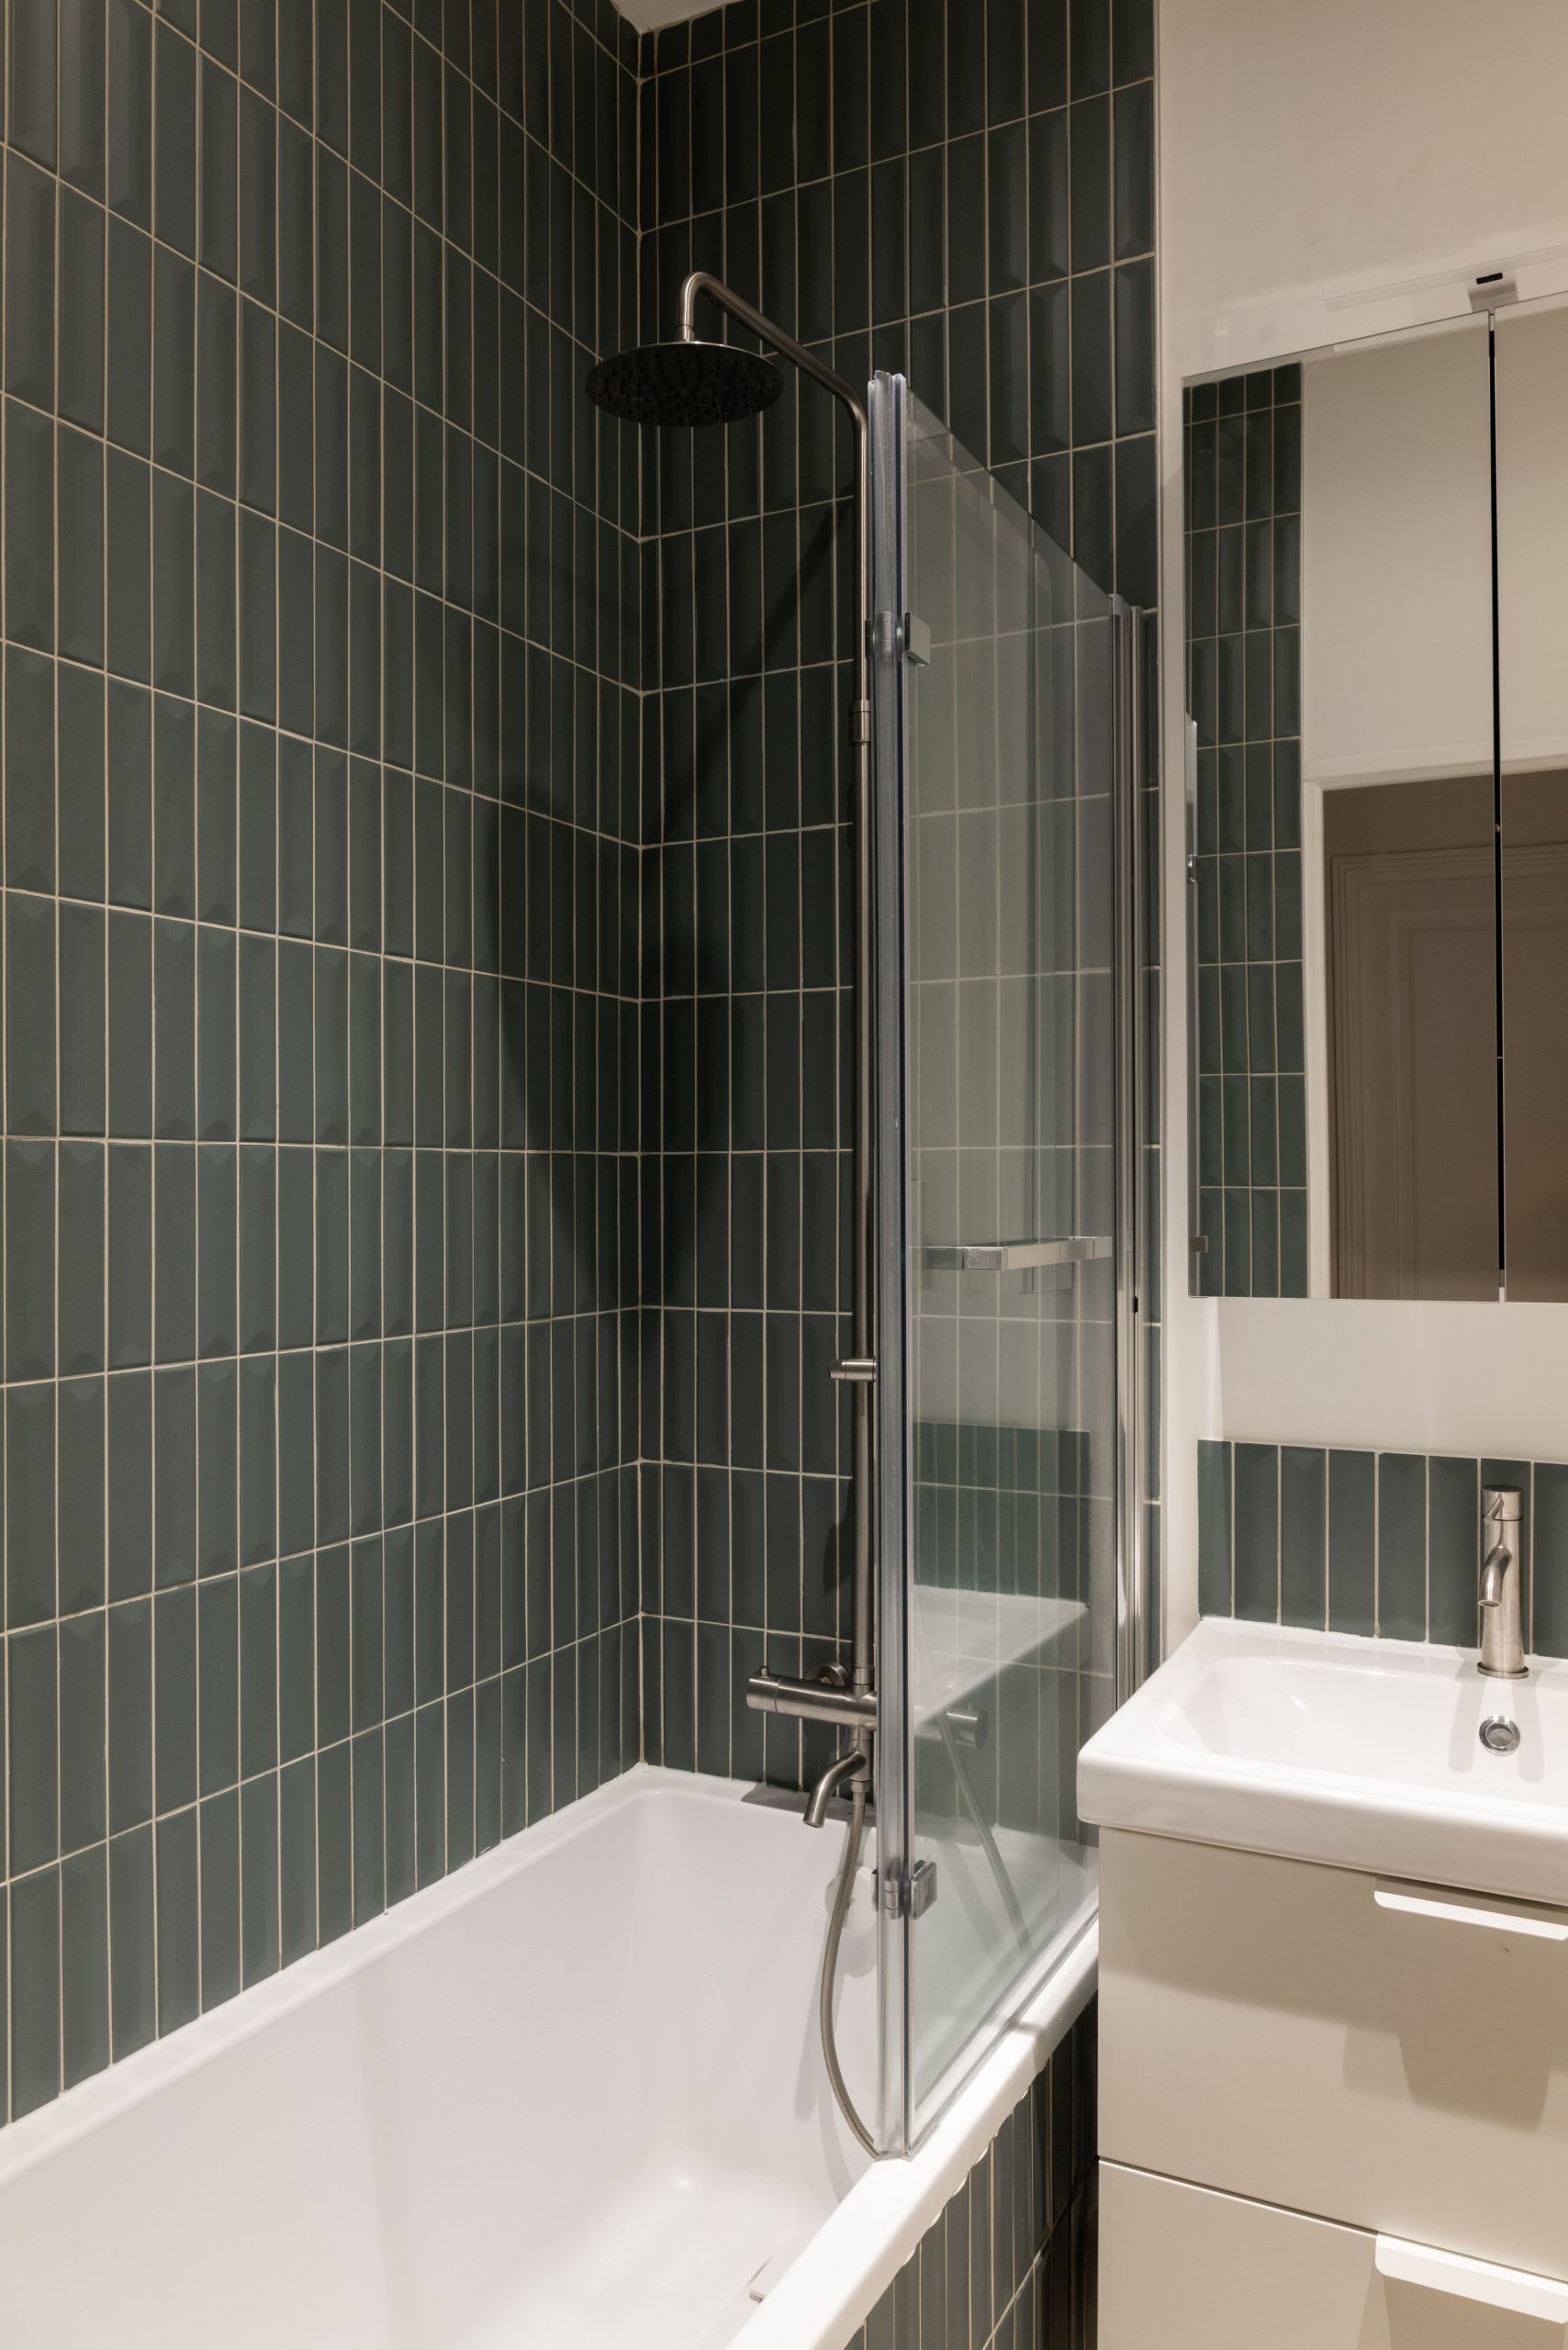 salle de bain blanche et verte photo ©Agathe Tissier